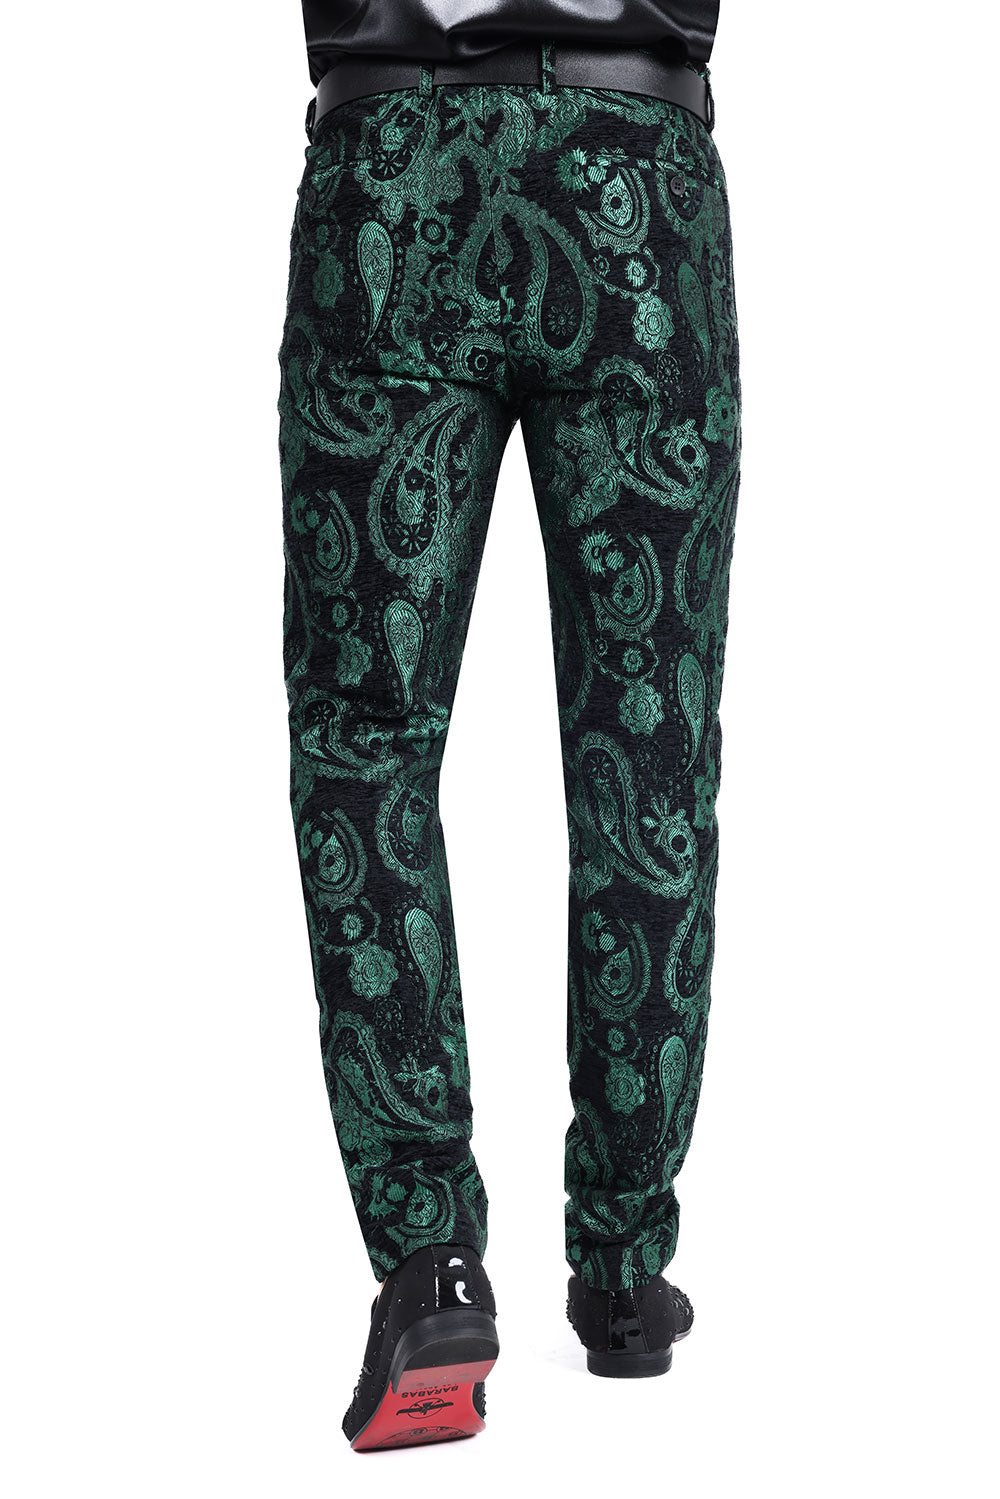 Barabas Men's Paisley Floral Print Design Luxury Pants 2CP3101 Green Black